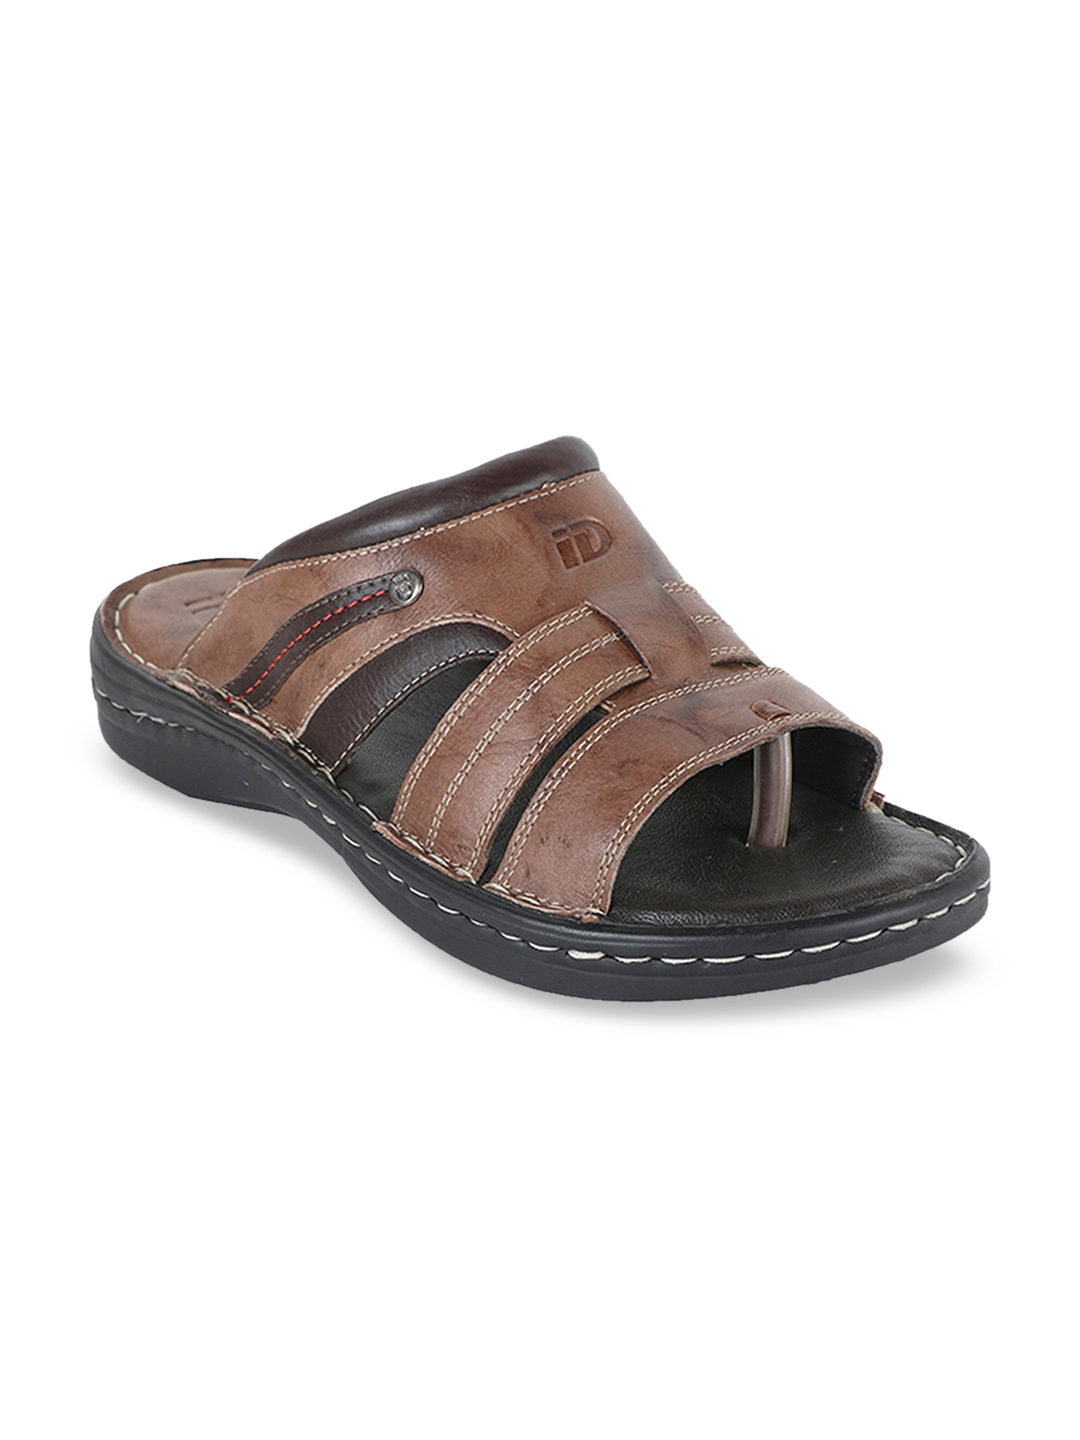 Buy ID Men Leather Sandals - Sandals for Men 10651358 | Myntra